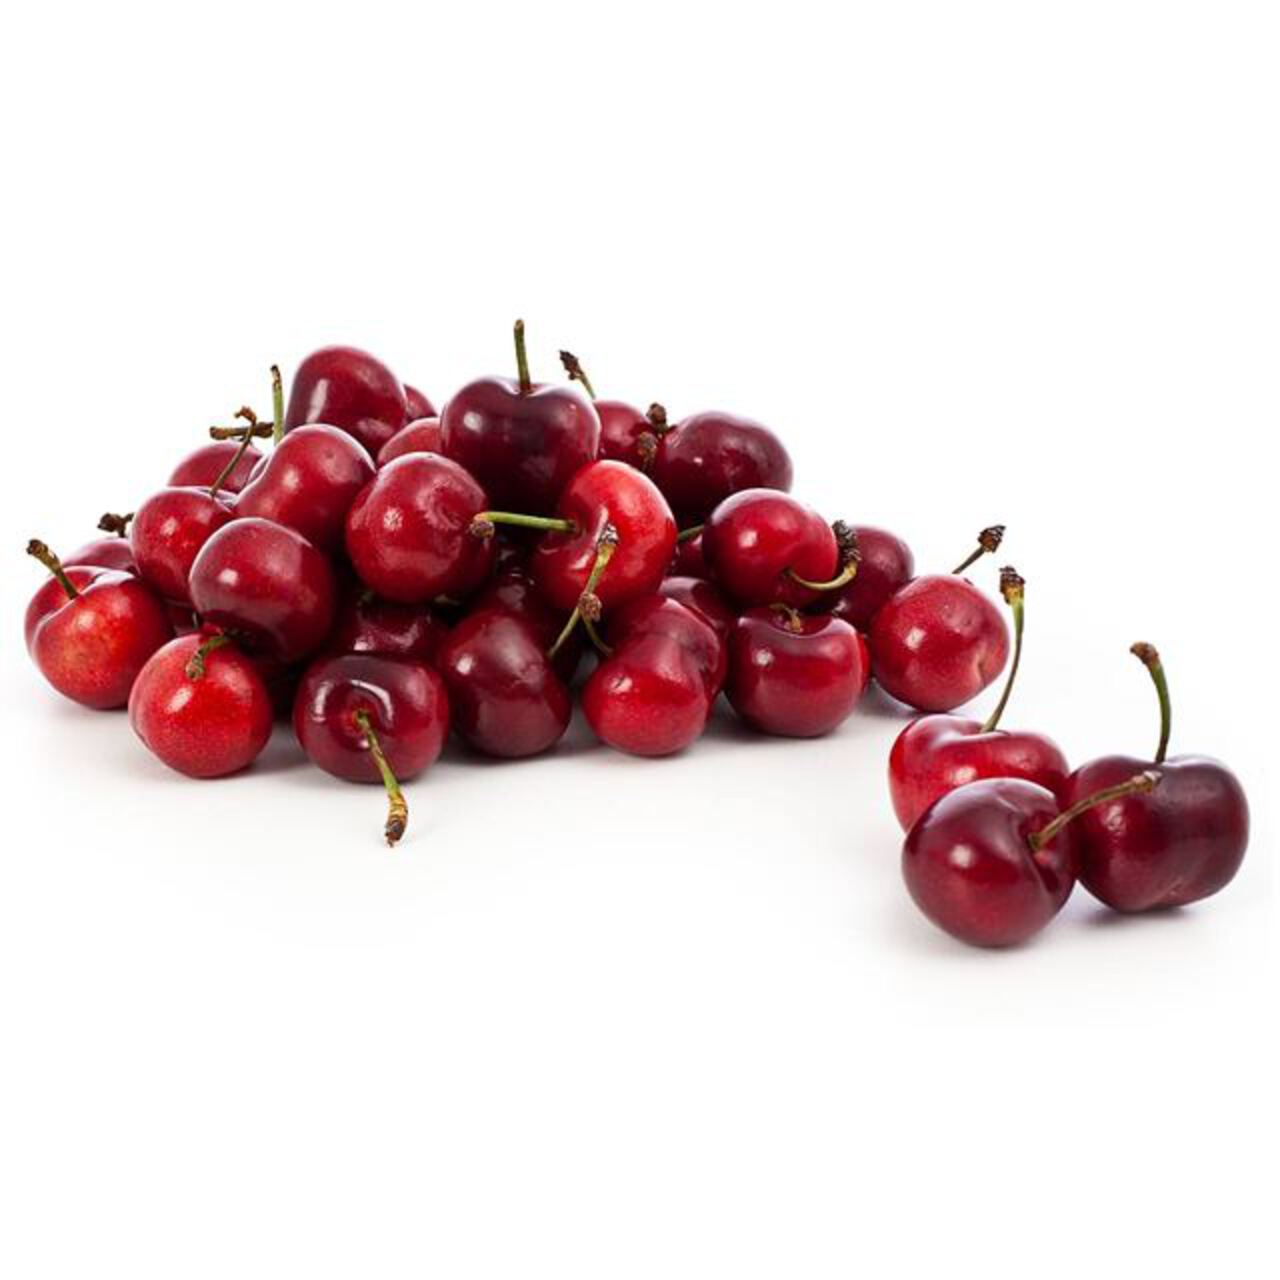 Ocado Cherries 500g